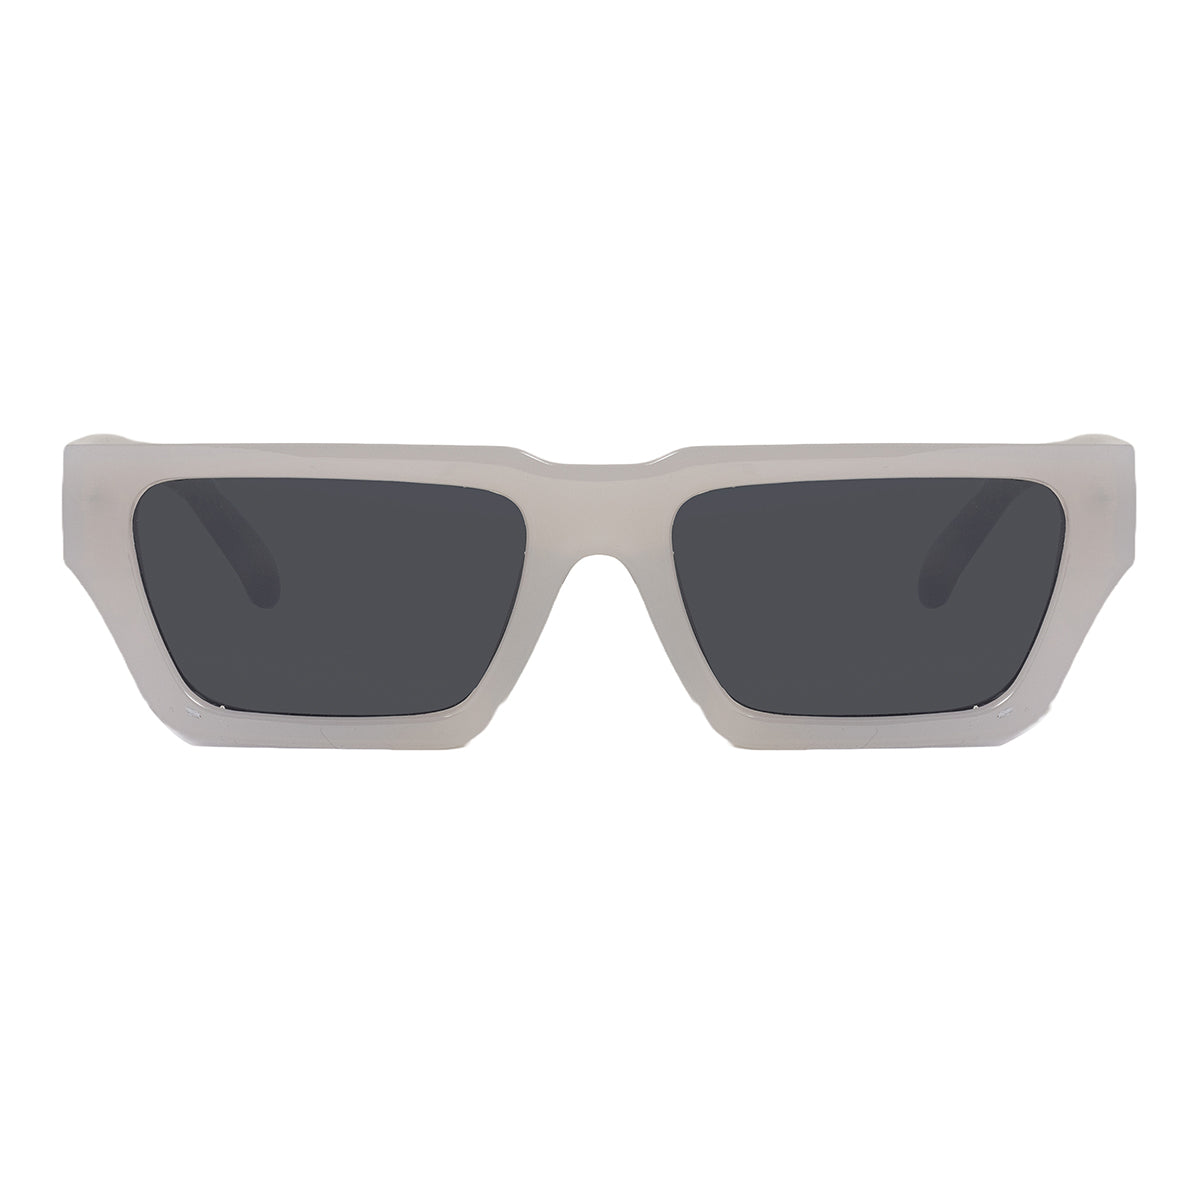 Vista Street Sunglasses